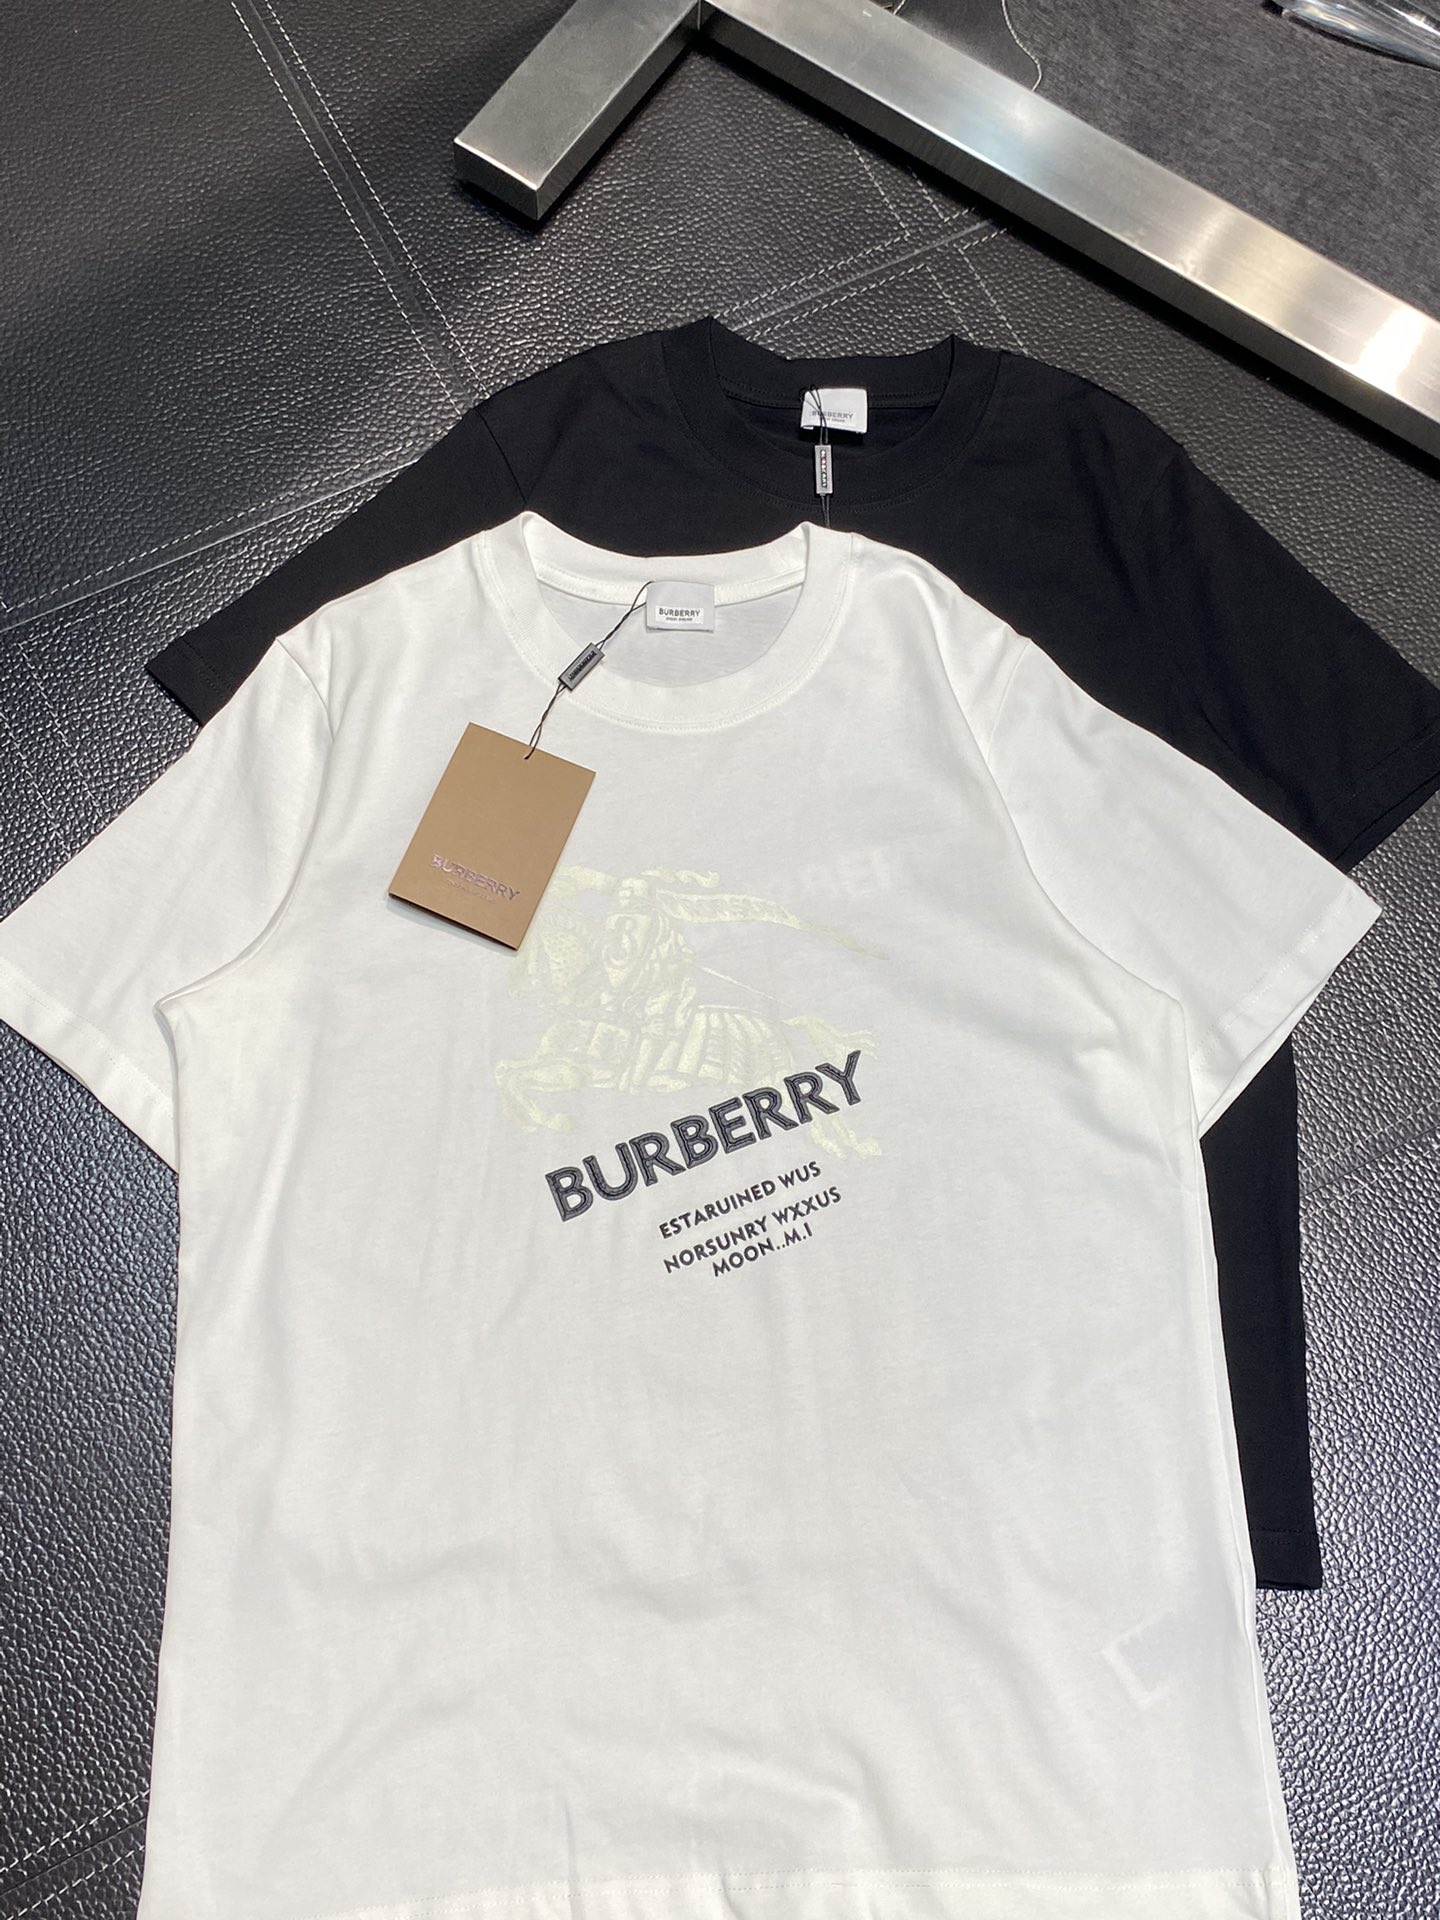 Burberry Clothing T-Shirt Men Fashion Short Sleeve